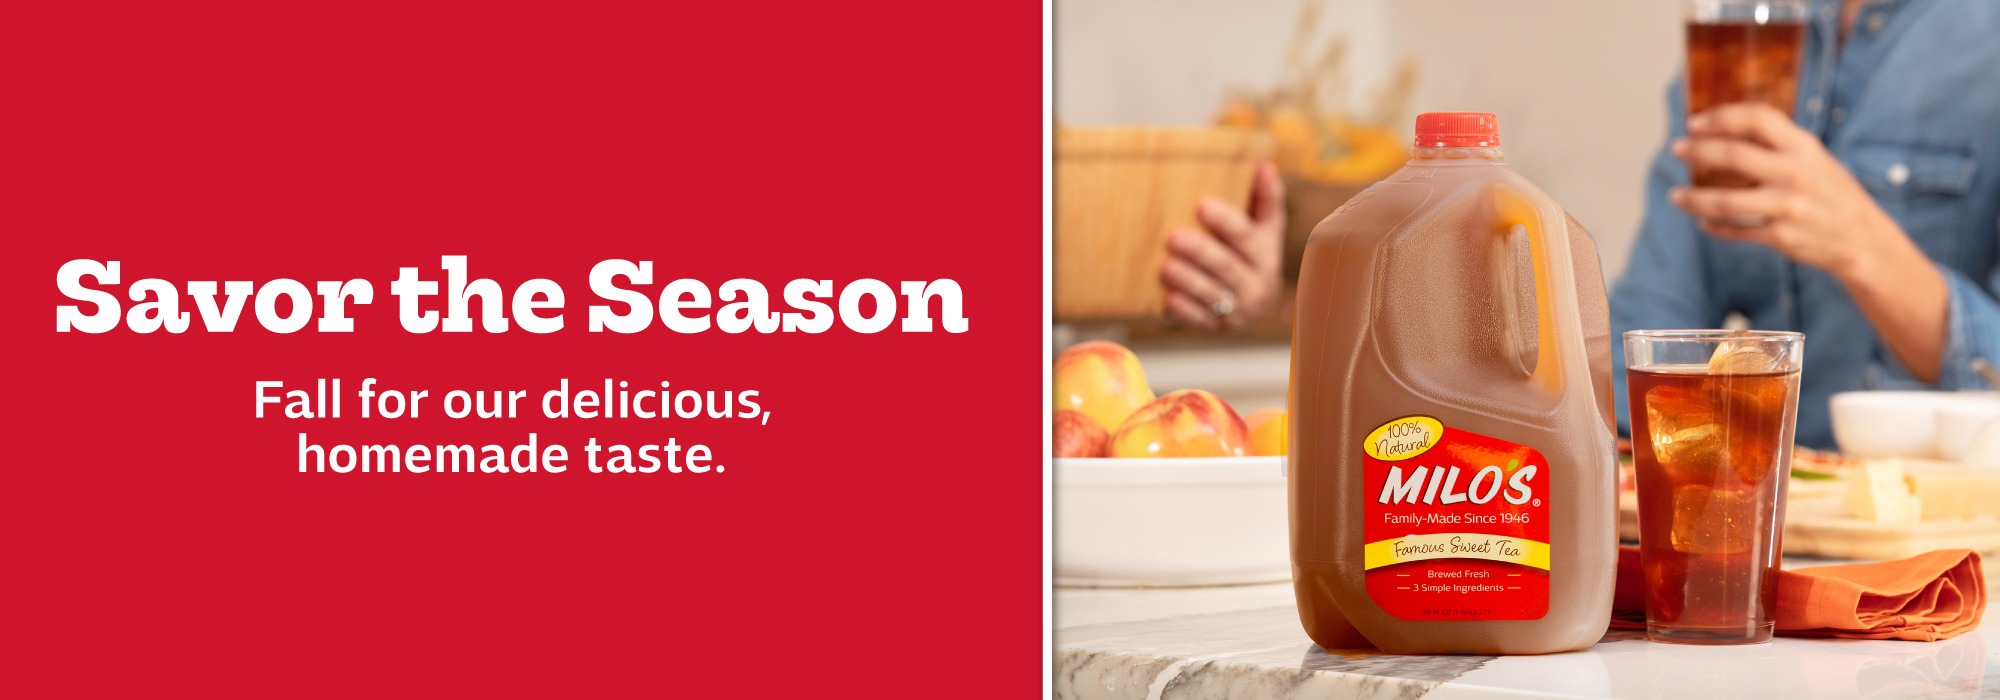 Savor the Season. Fall for our delicious, homemade taste.